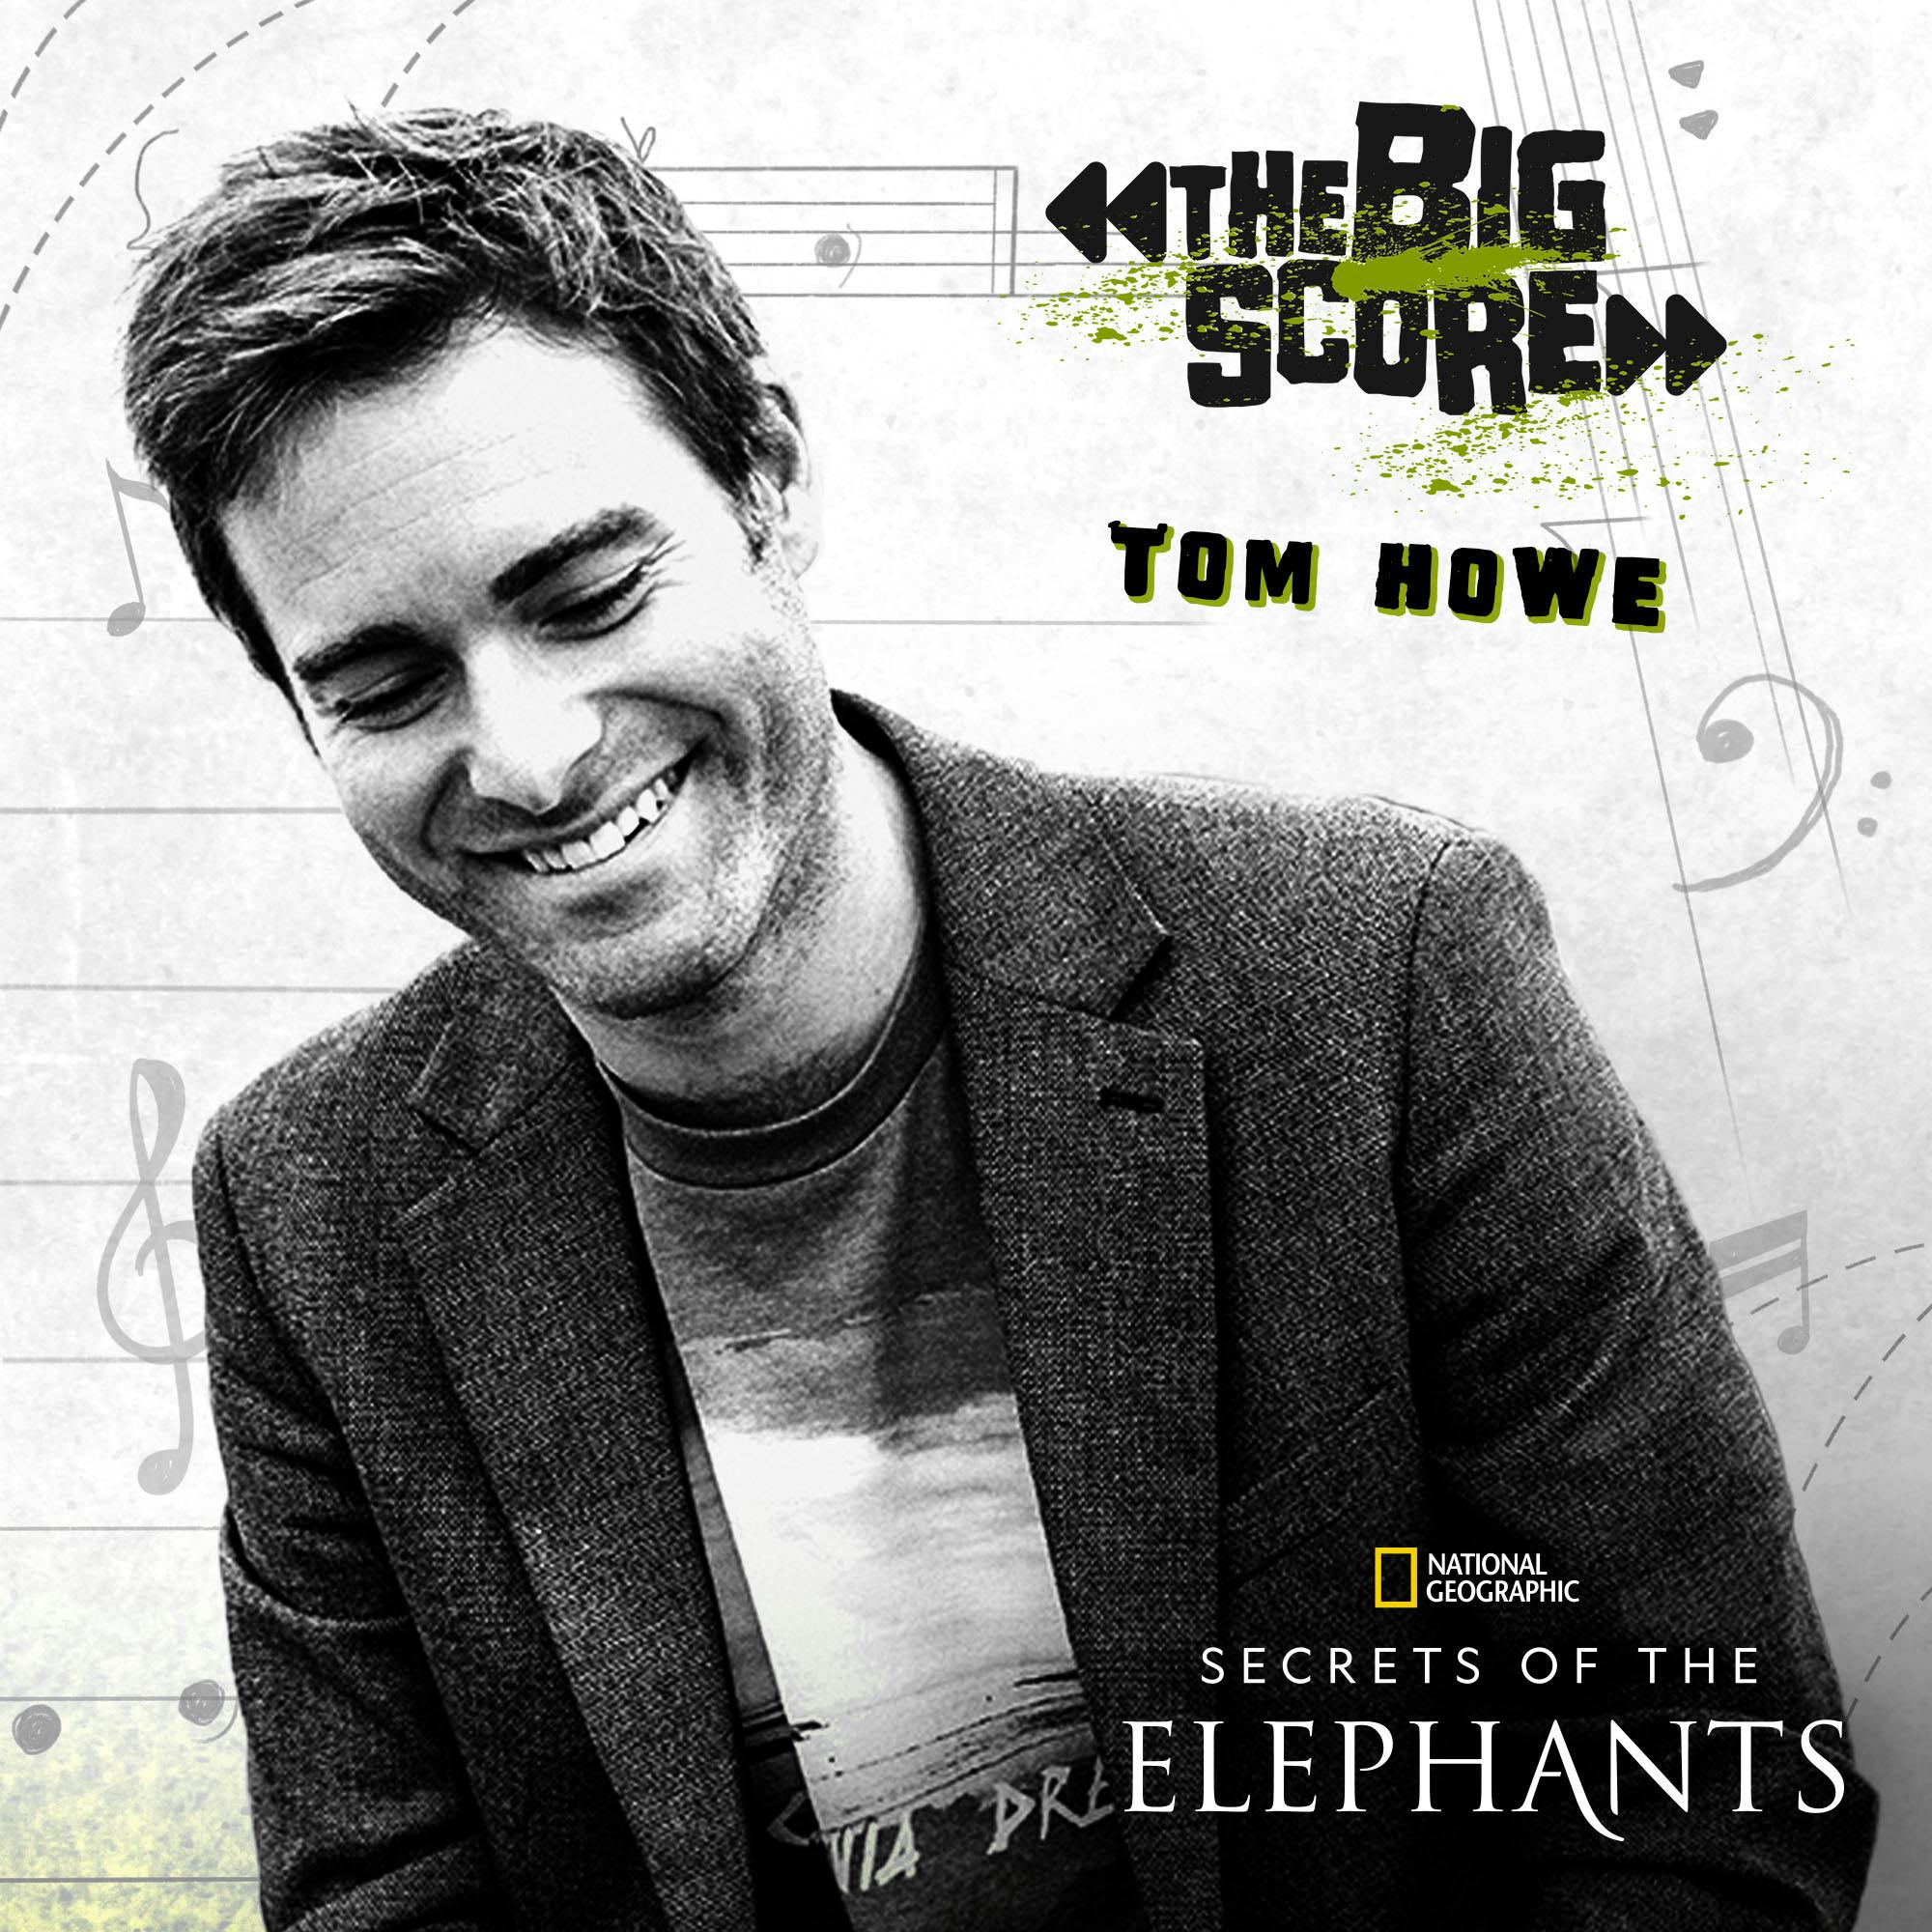 Tom Howe on National Geographic’s Secrets of the Elephants | The Big Score